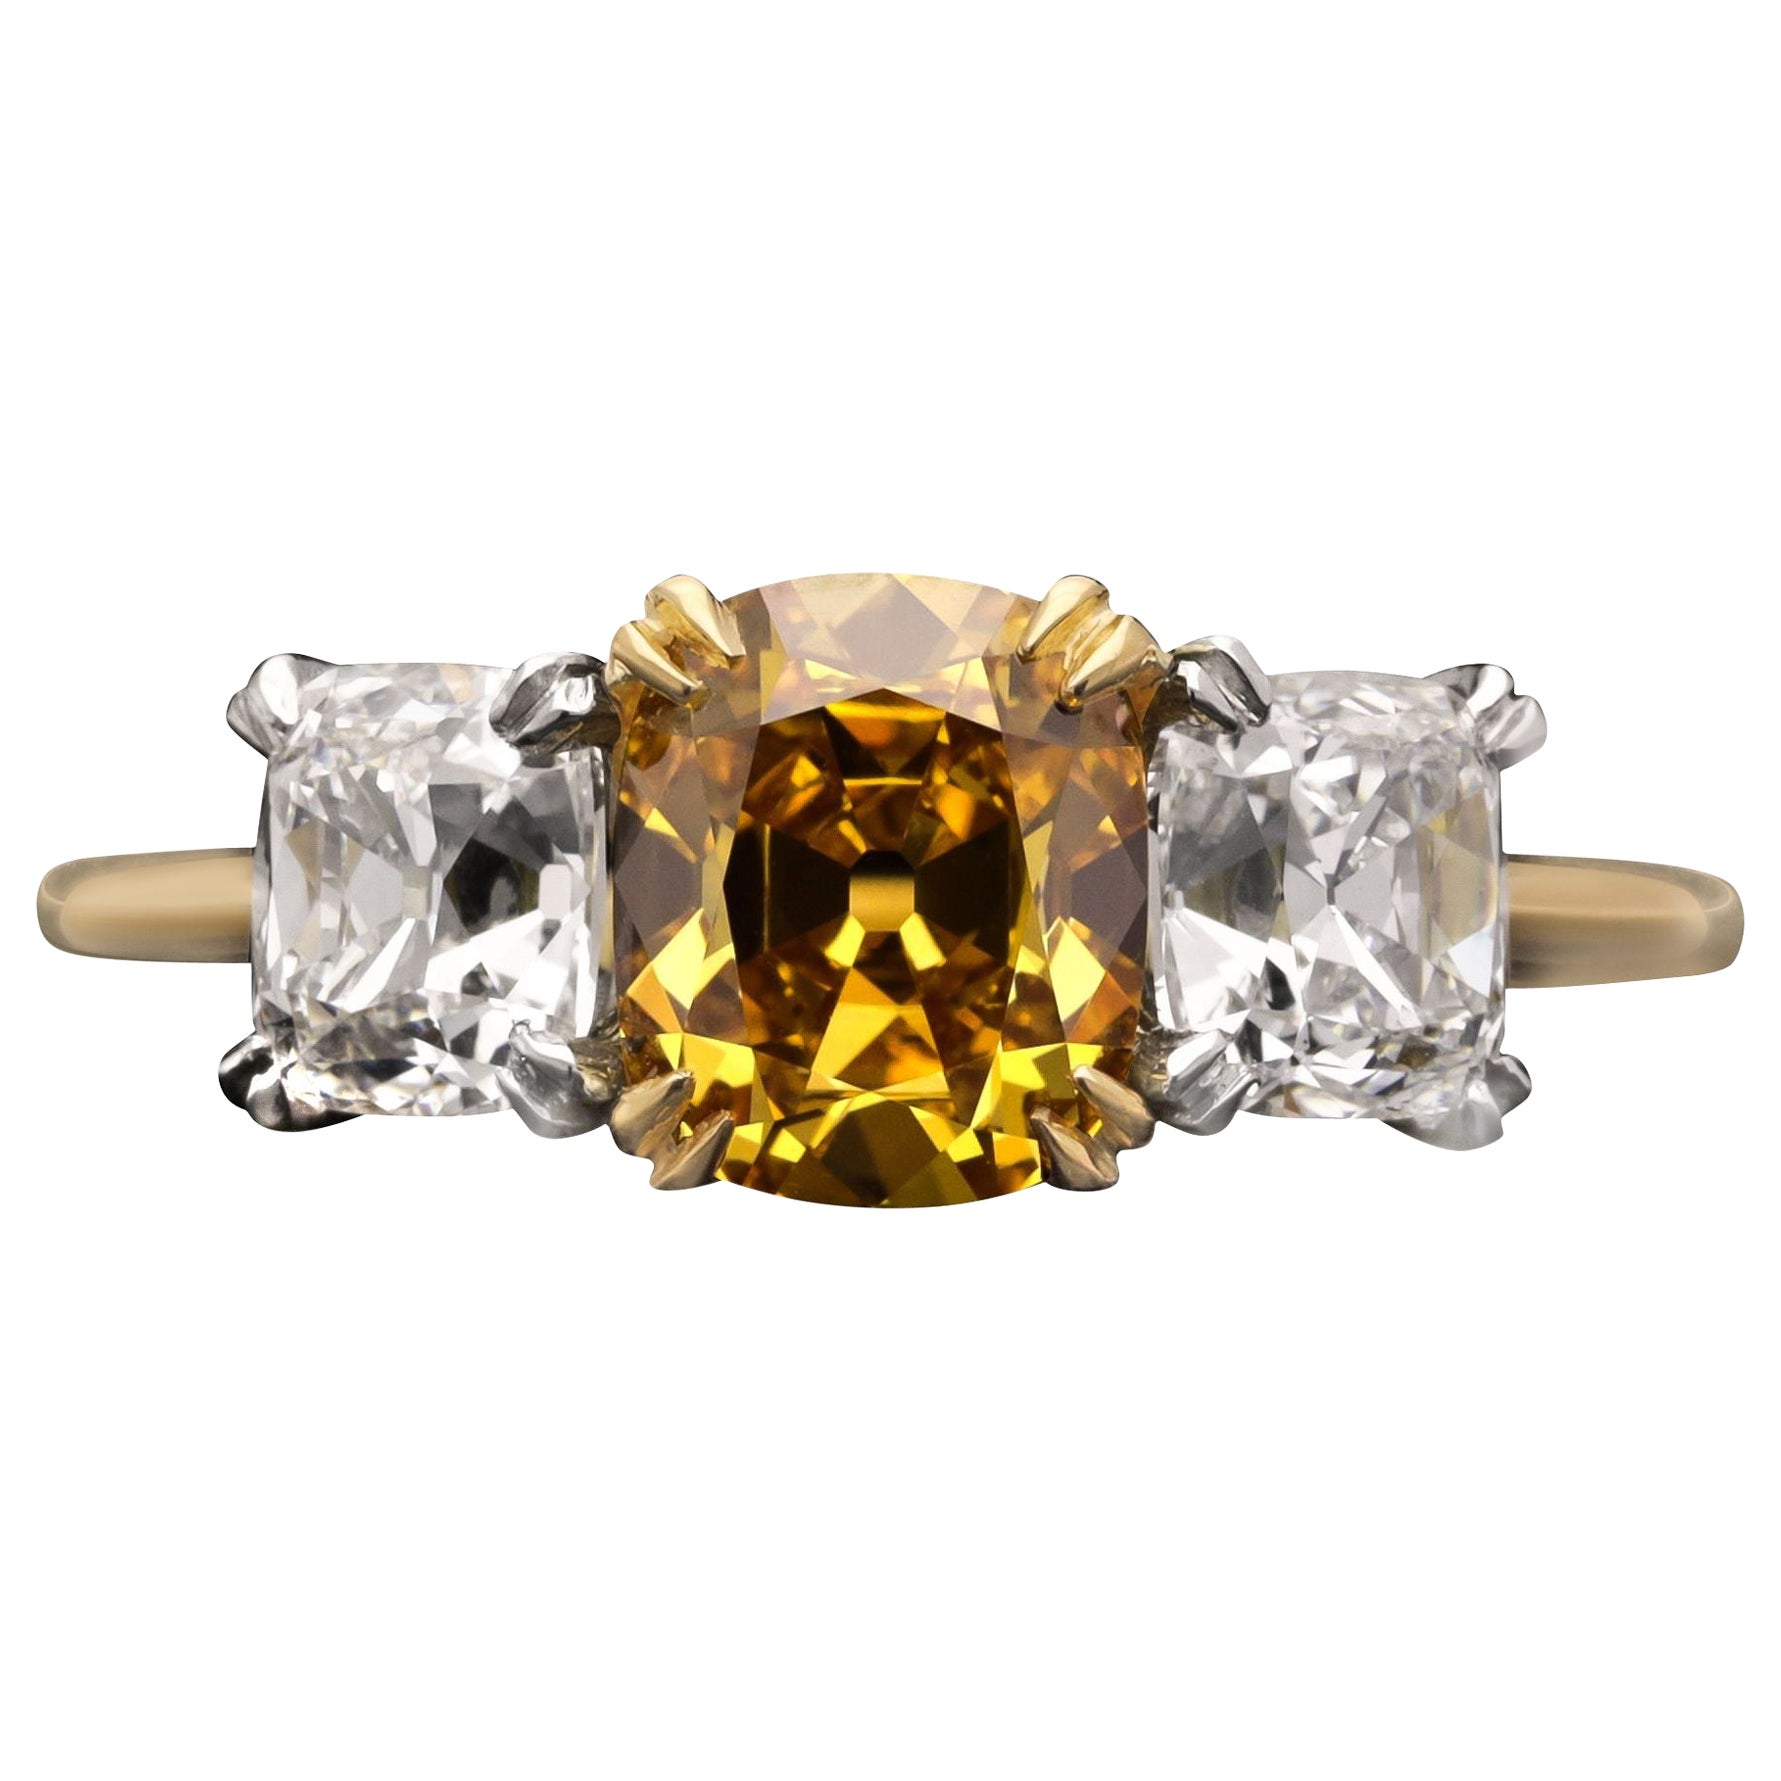 Hancocks 1.42ct Fancy Deep Orangey-Yellow Diamond Ring with Diamond Shoulders For Sale